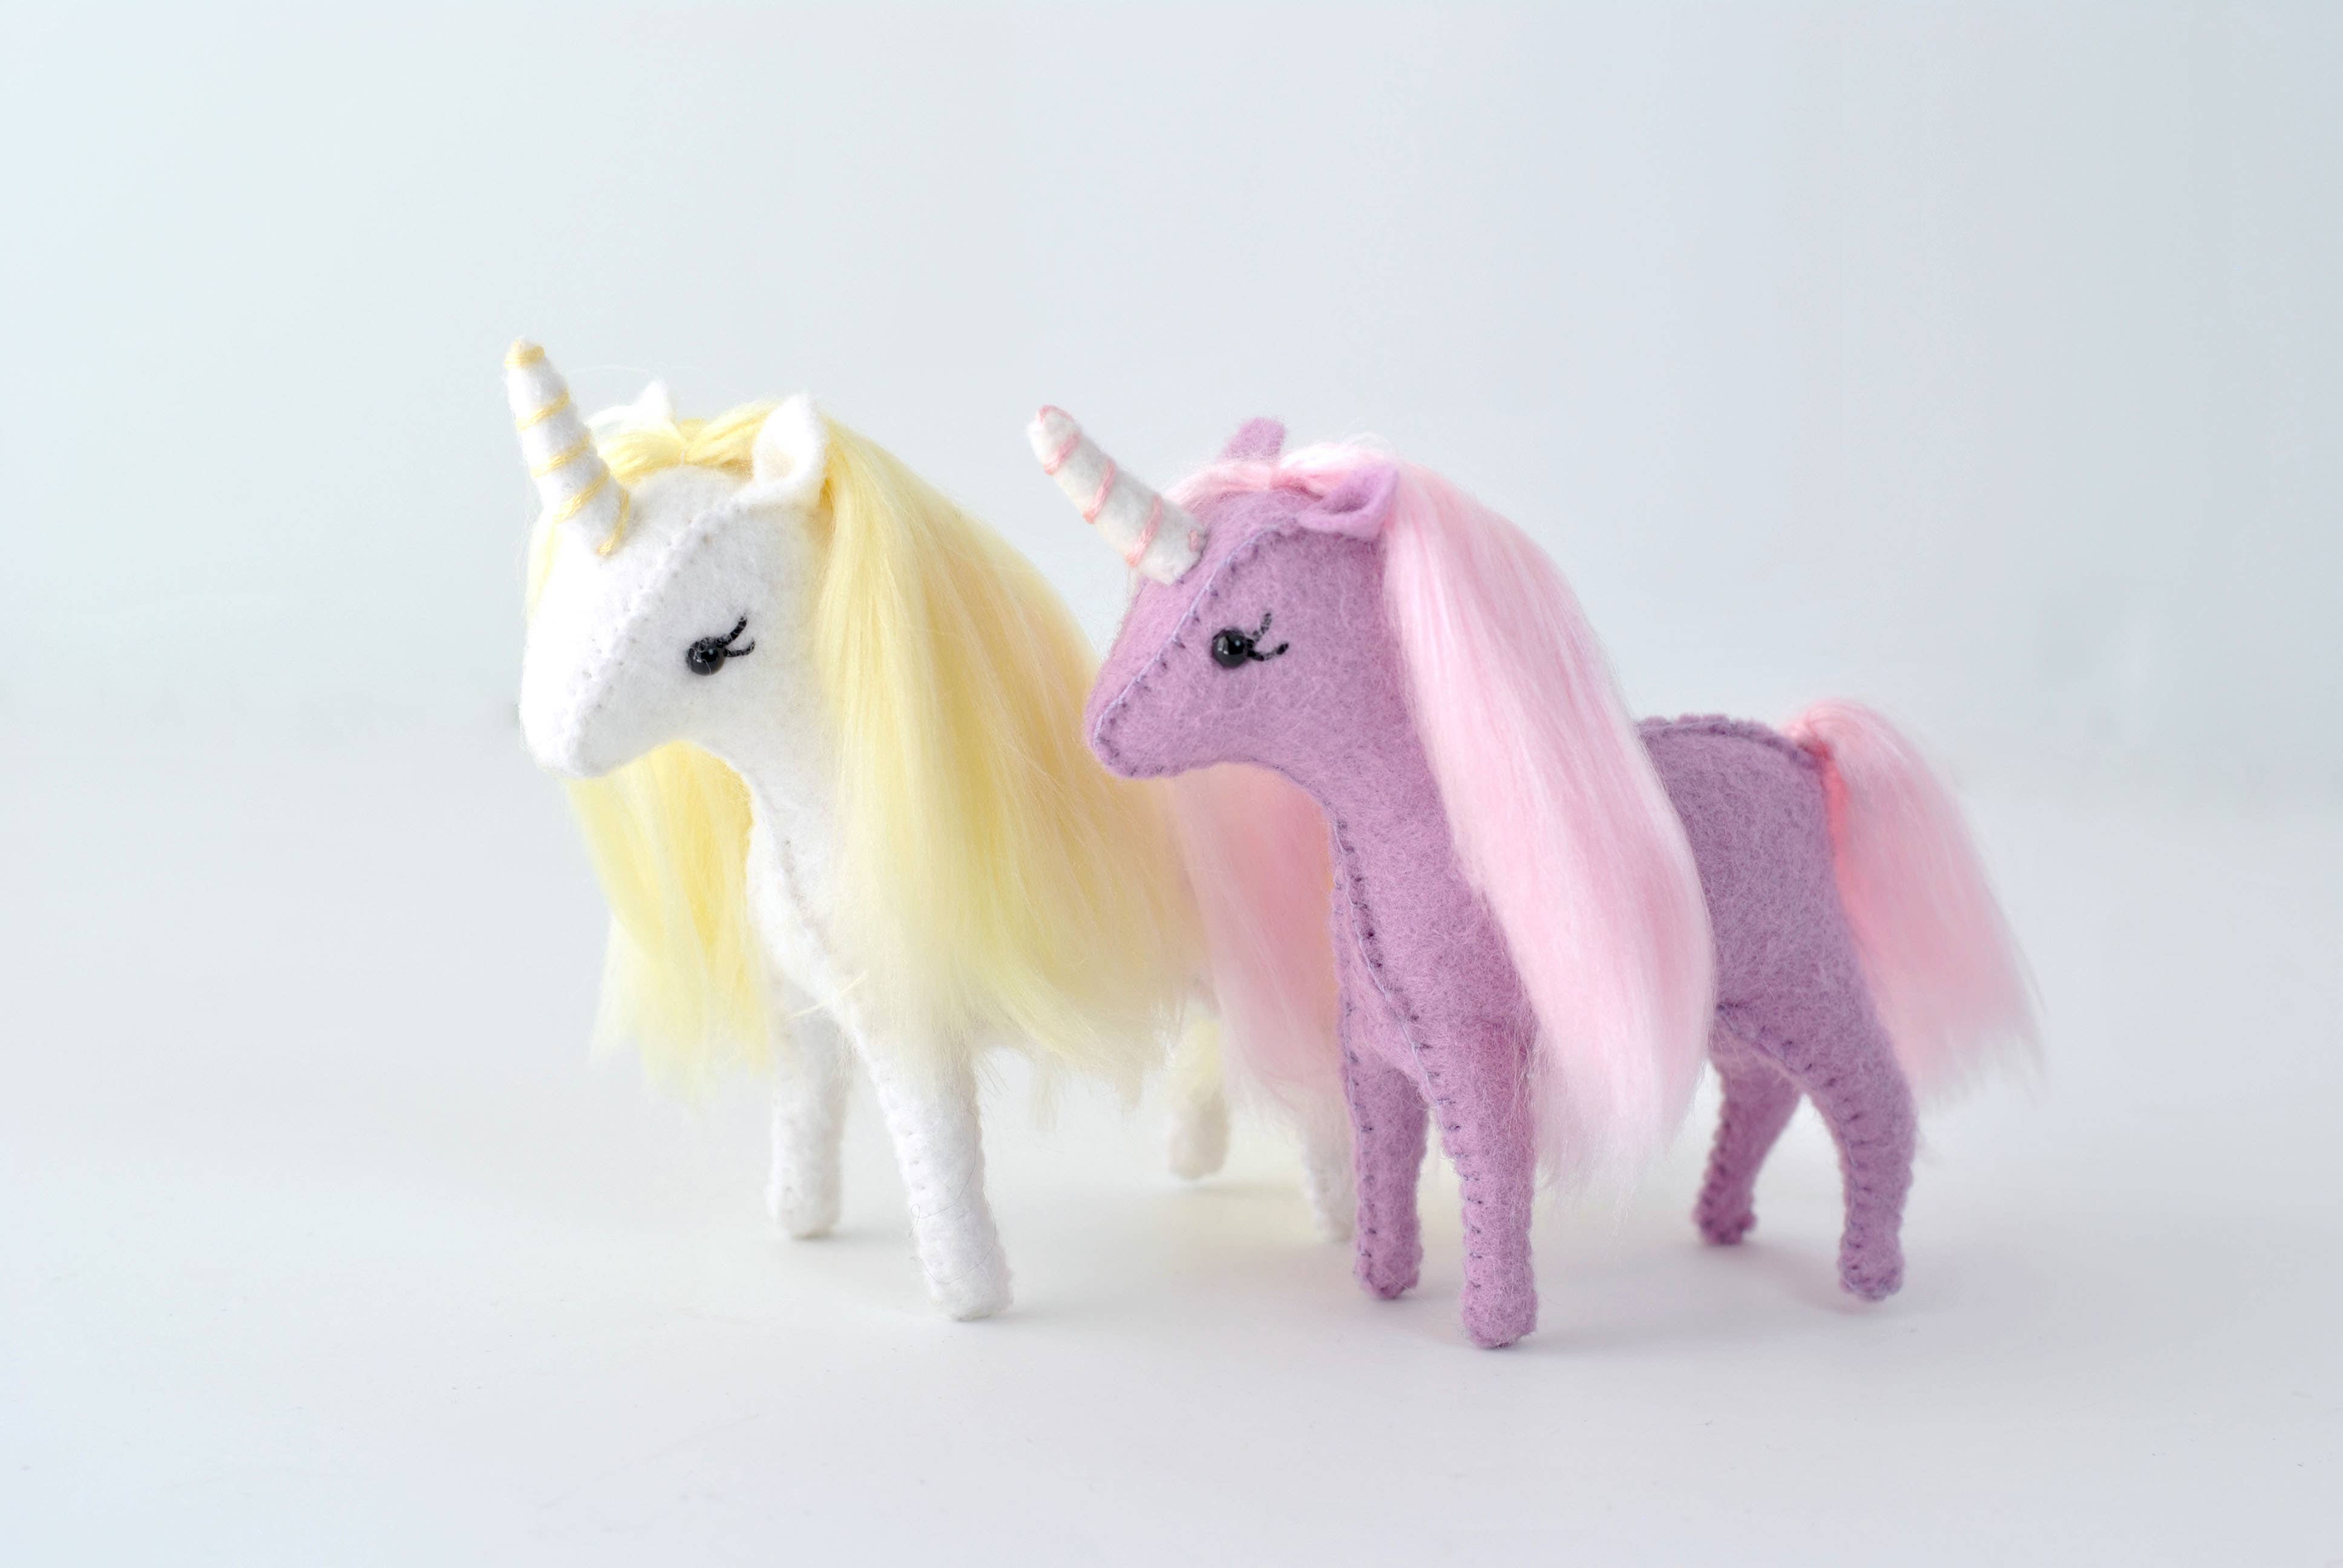 DelilahIris Designs - Baby Unicorn Sewing Kit DIY Felt Crafts